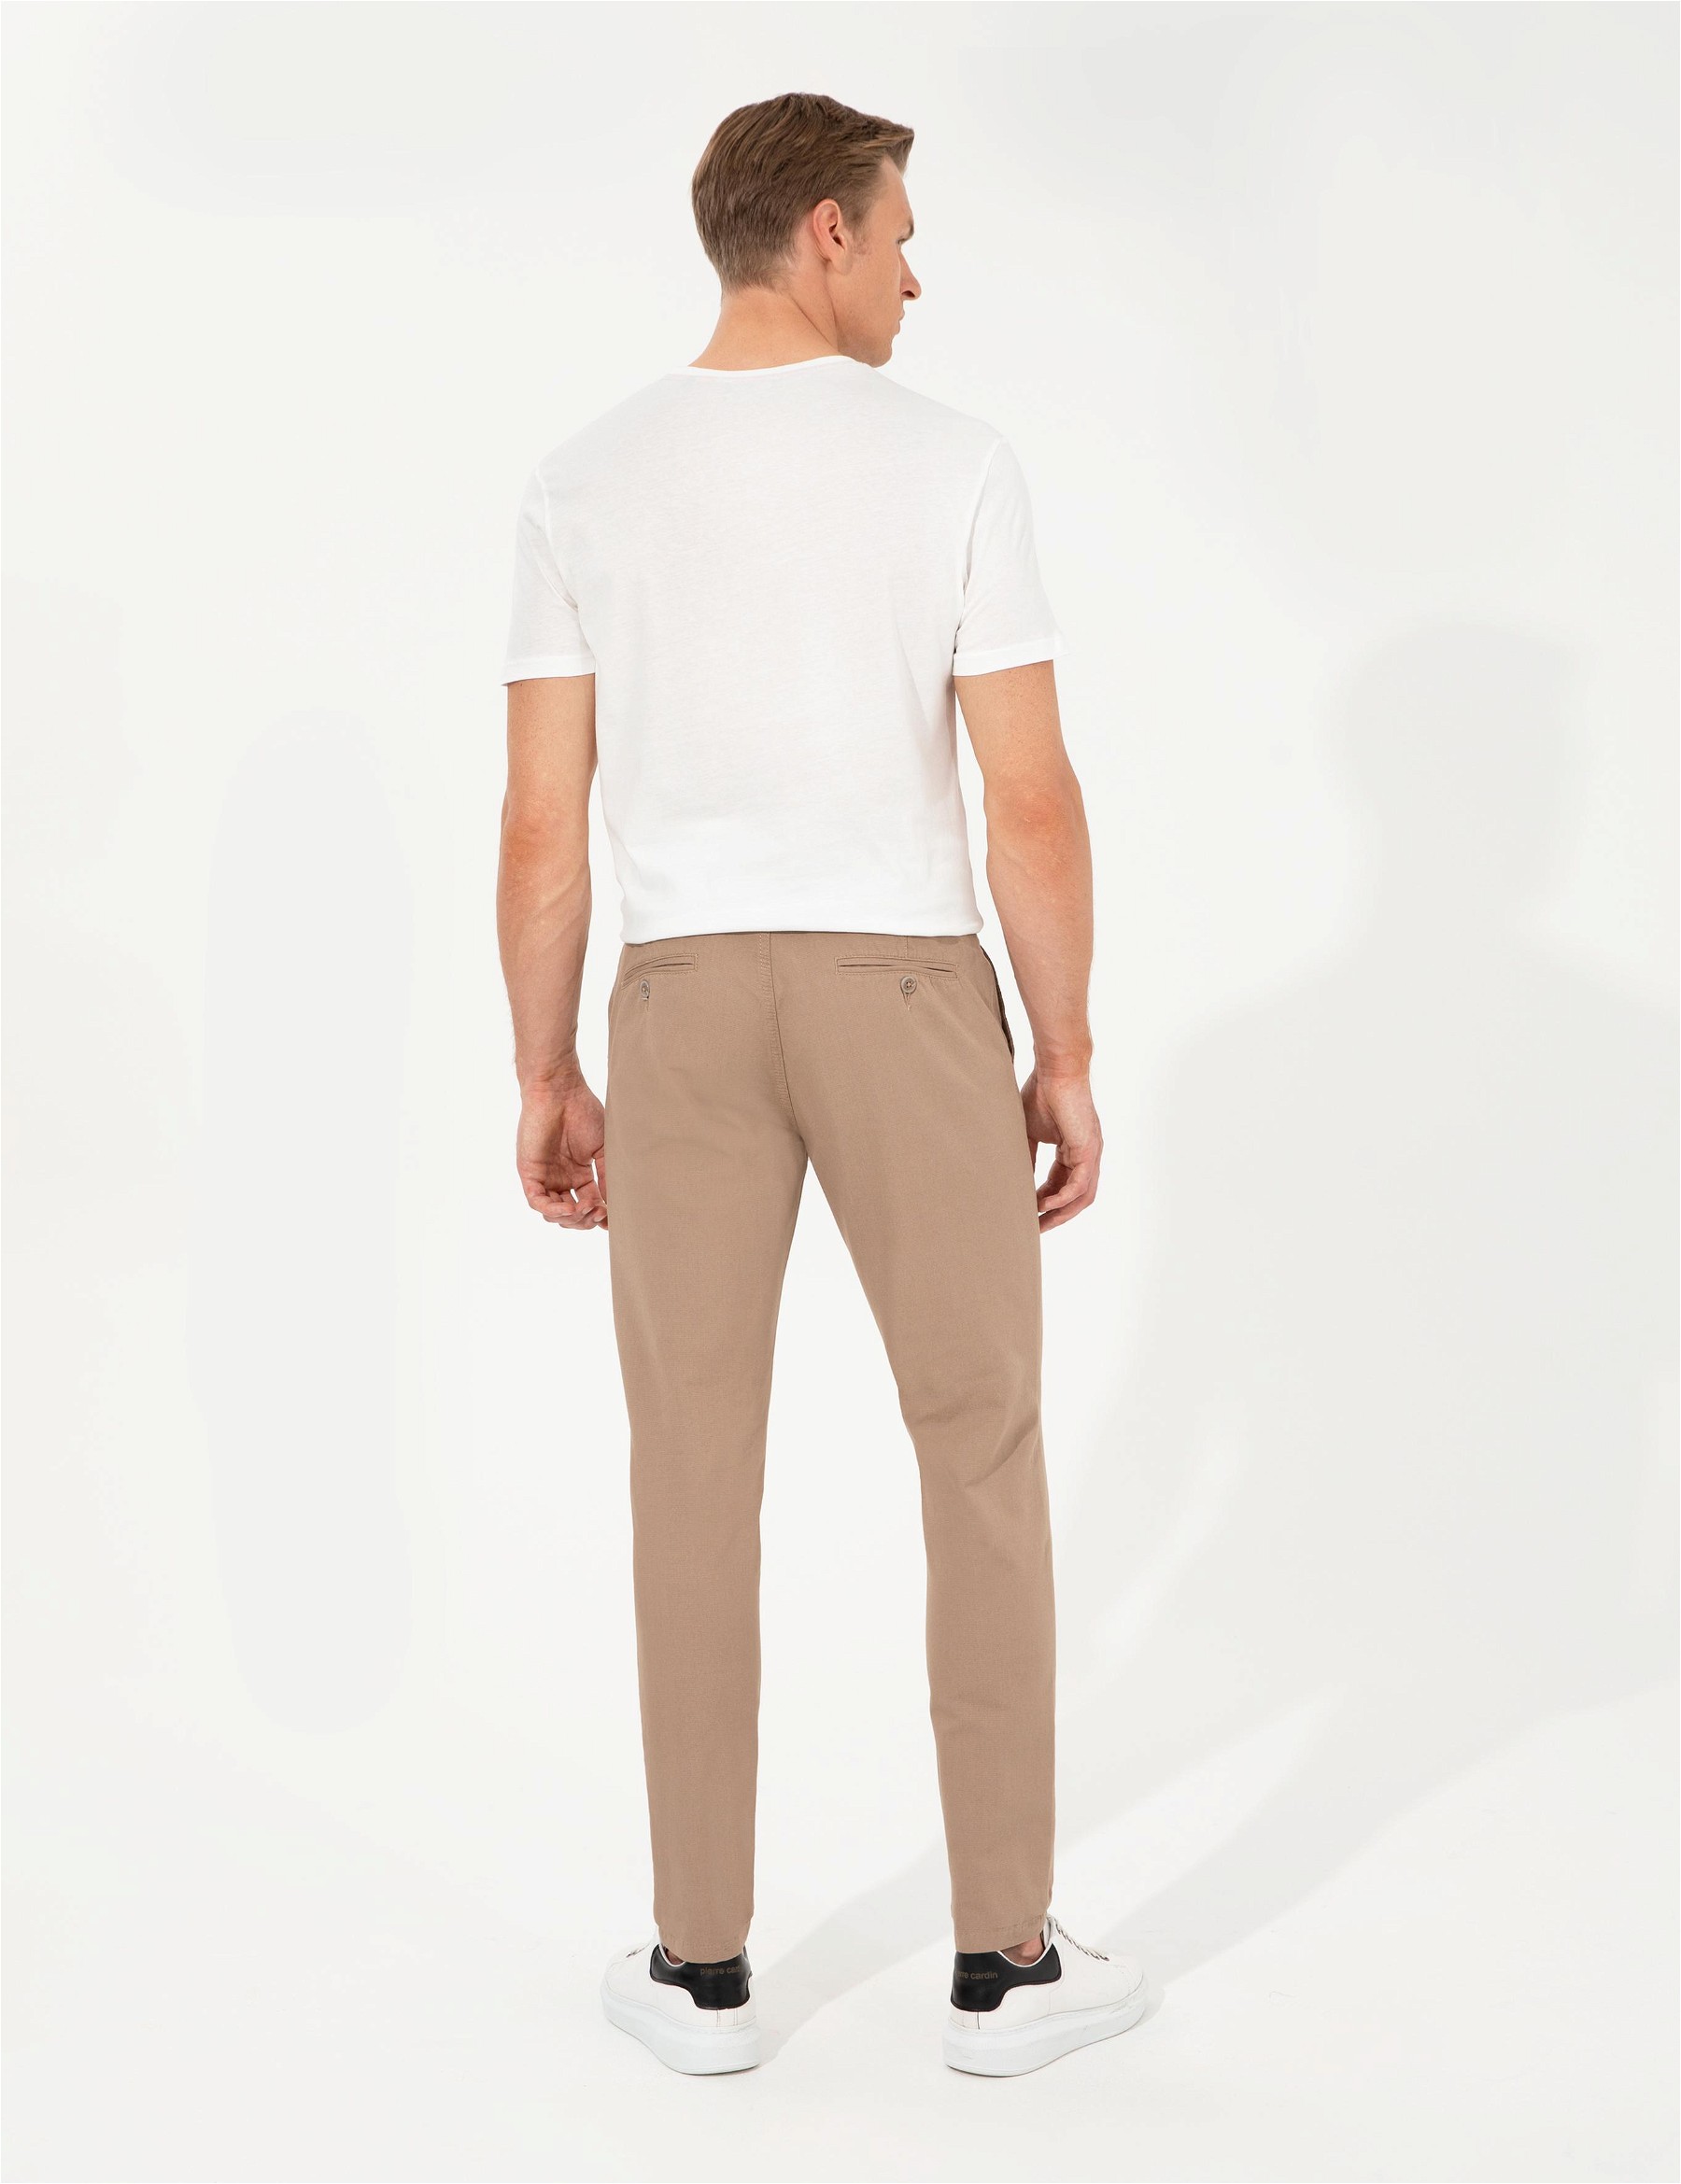 MEN FASHION Trousers Basic Carhartt slacks discount 85% Beige 44                  EU 